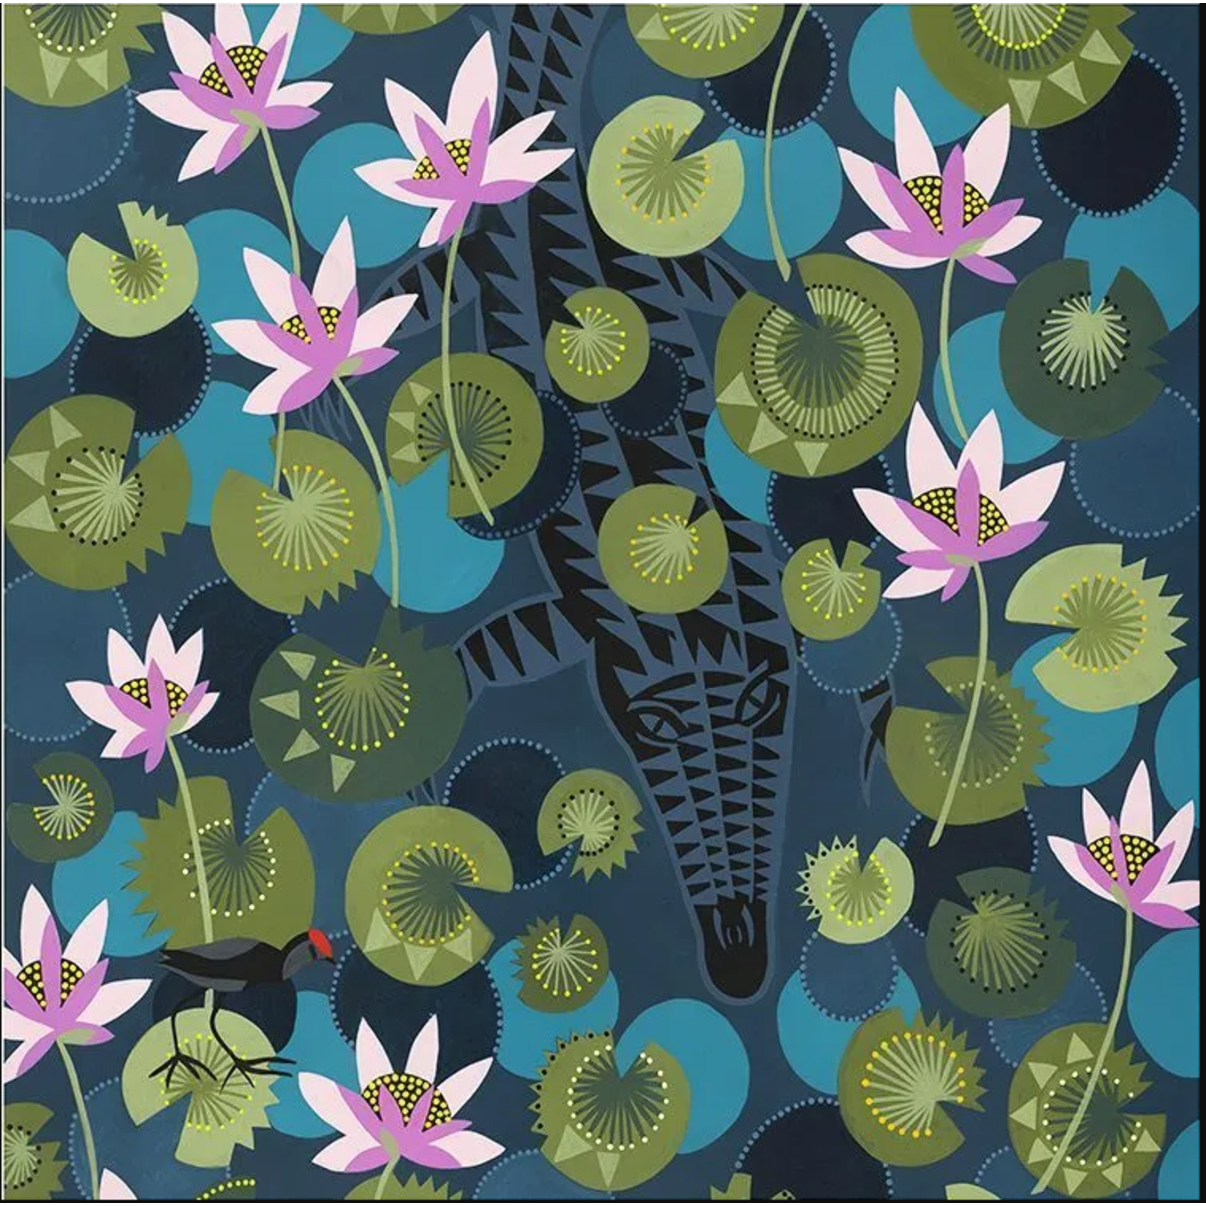 Crocodile among the Lilies